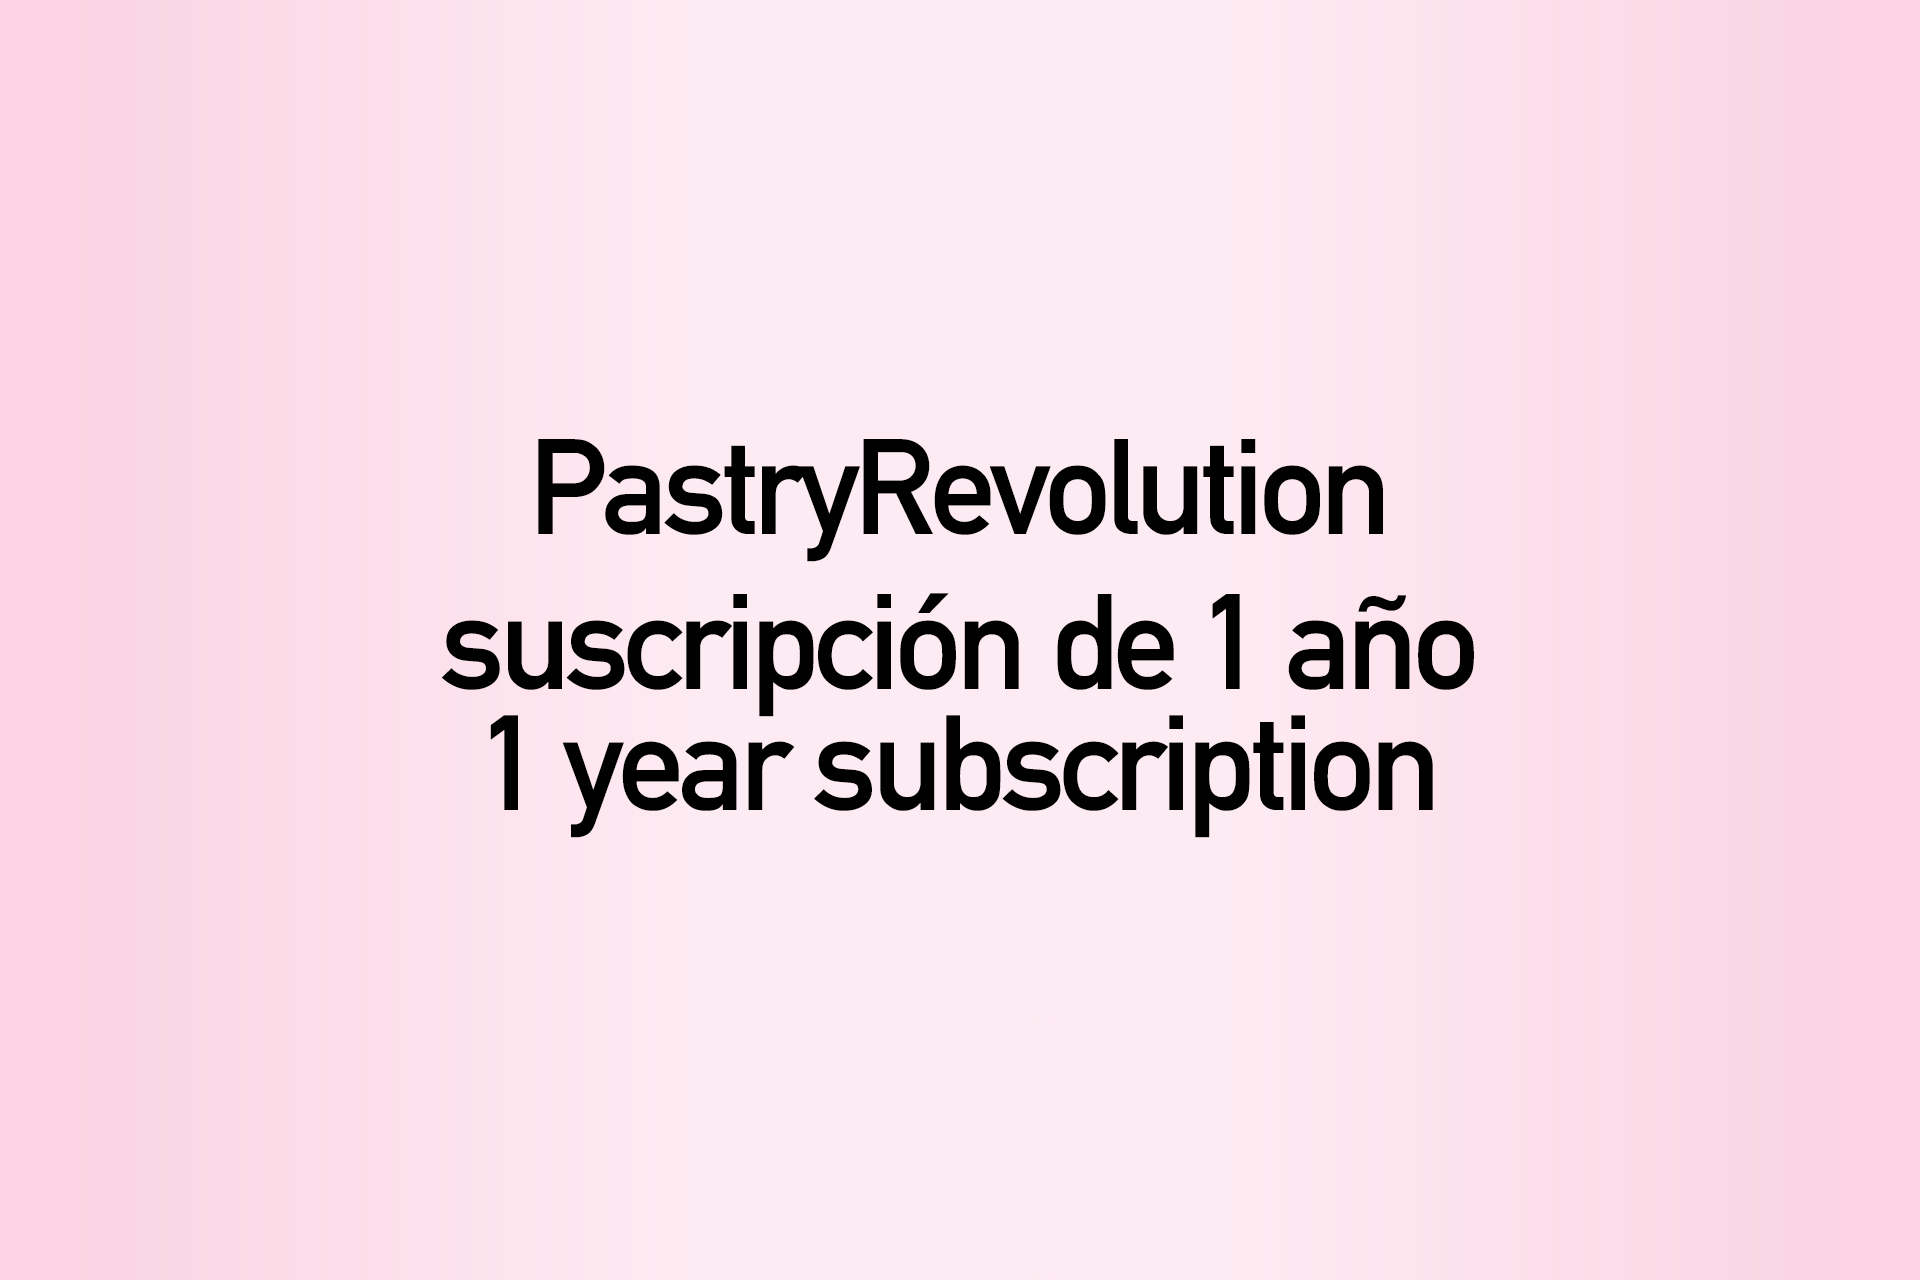  PastryRevolution, 1 year subscription